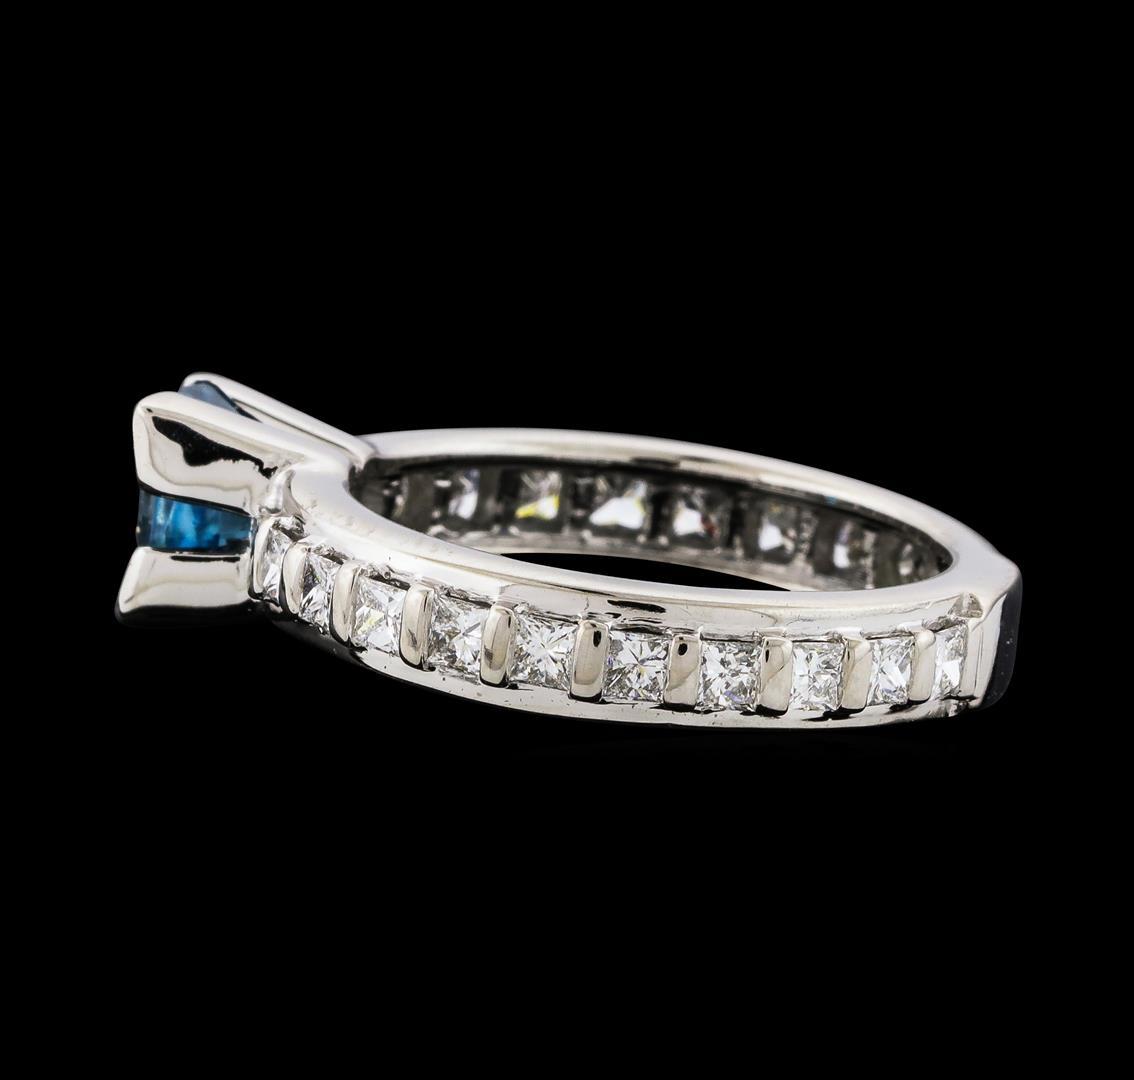 1.60 ctw Blue Zircon and Diamond Ring - 18KT White Gold